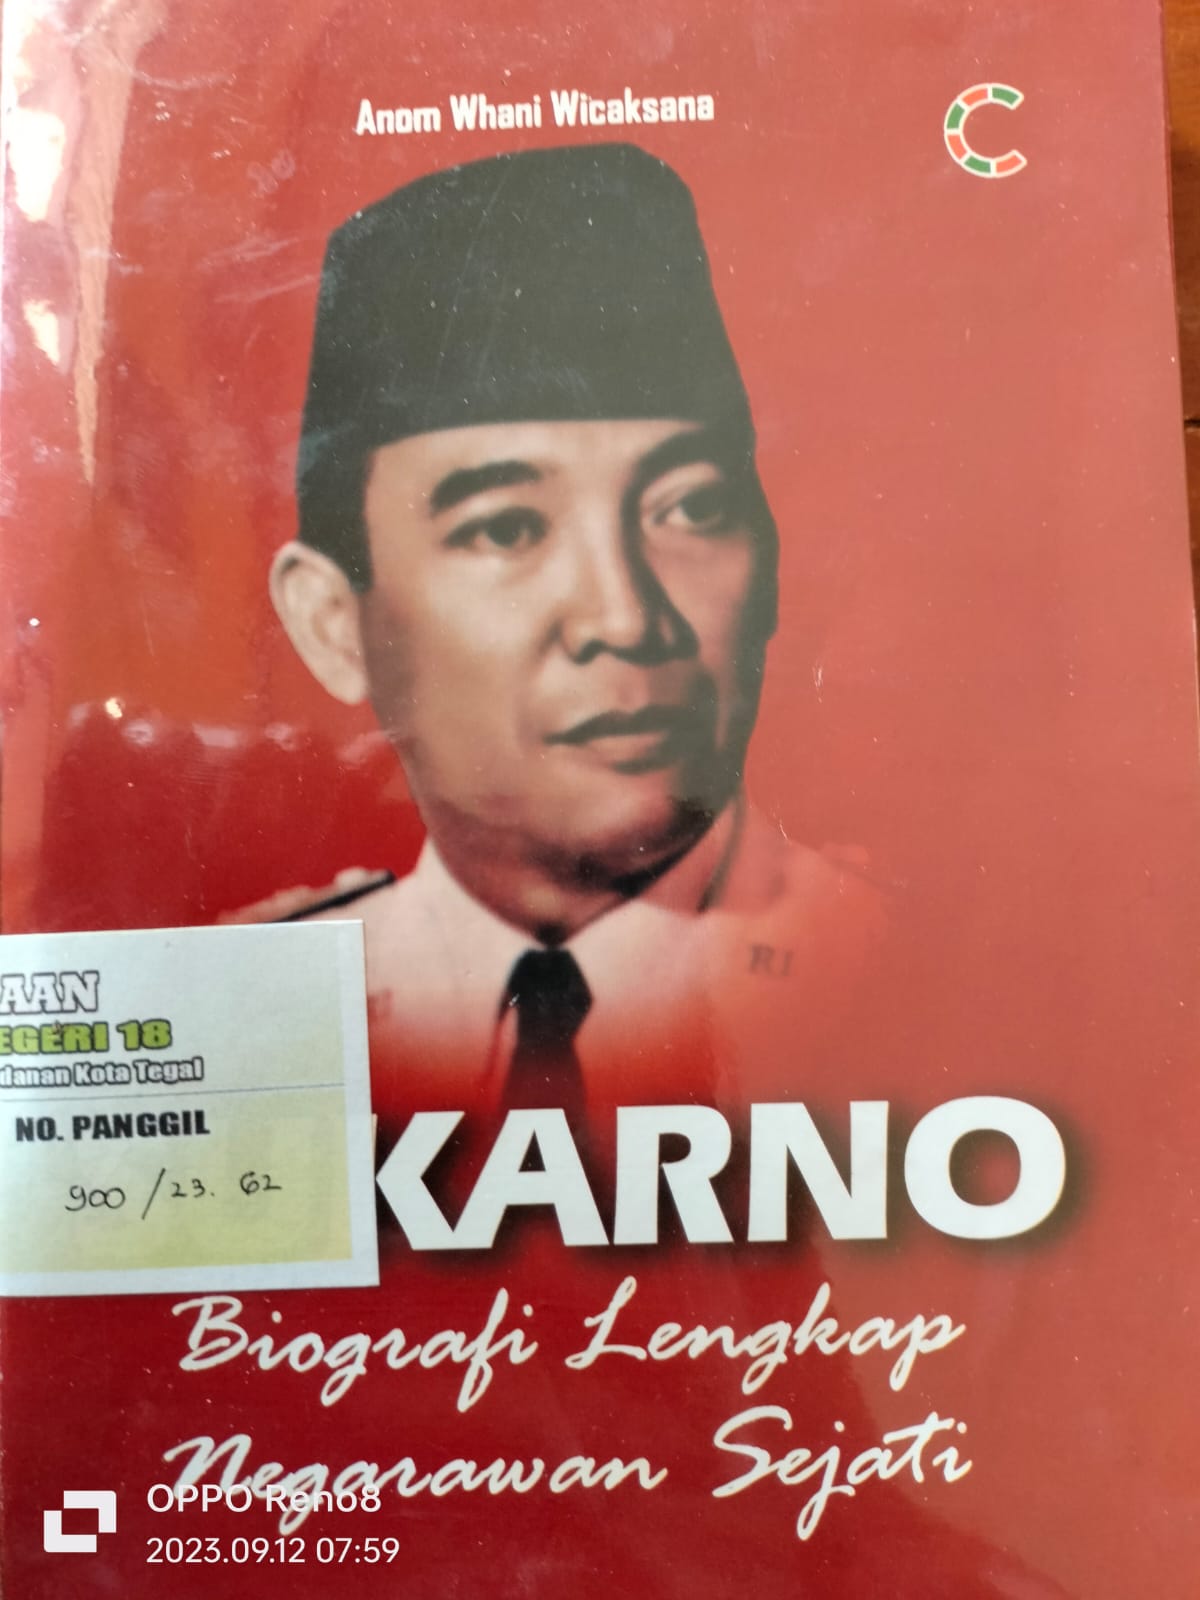 Sukarno Biografi Lengkap Negarawan Sejati